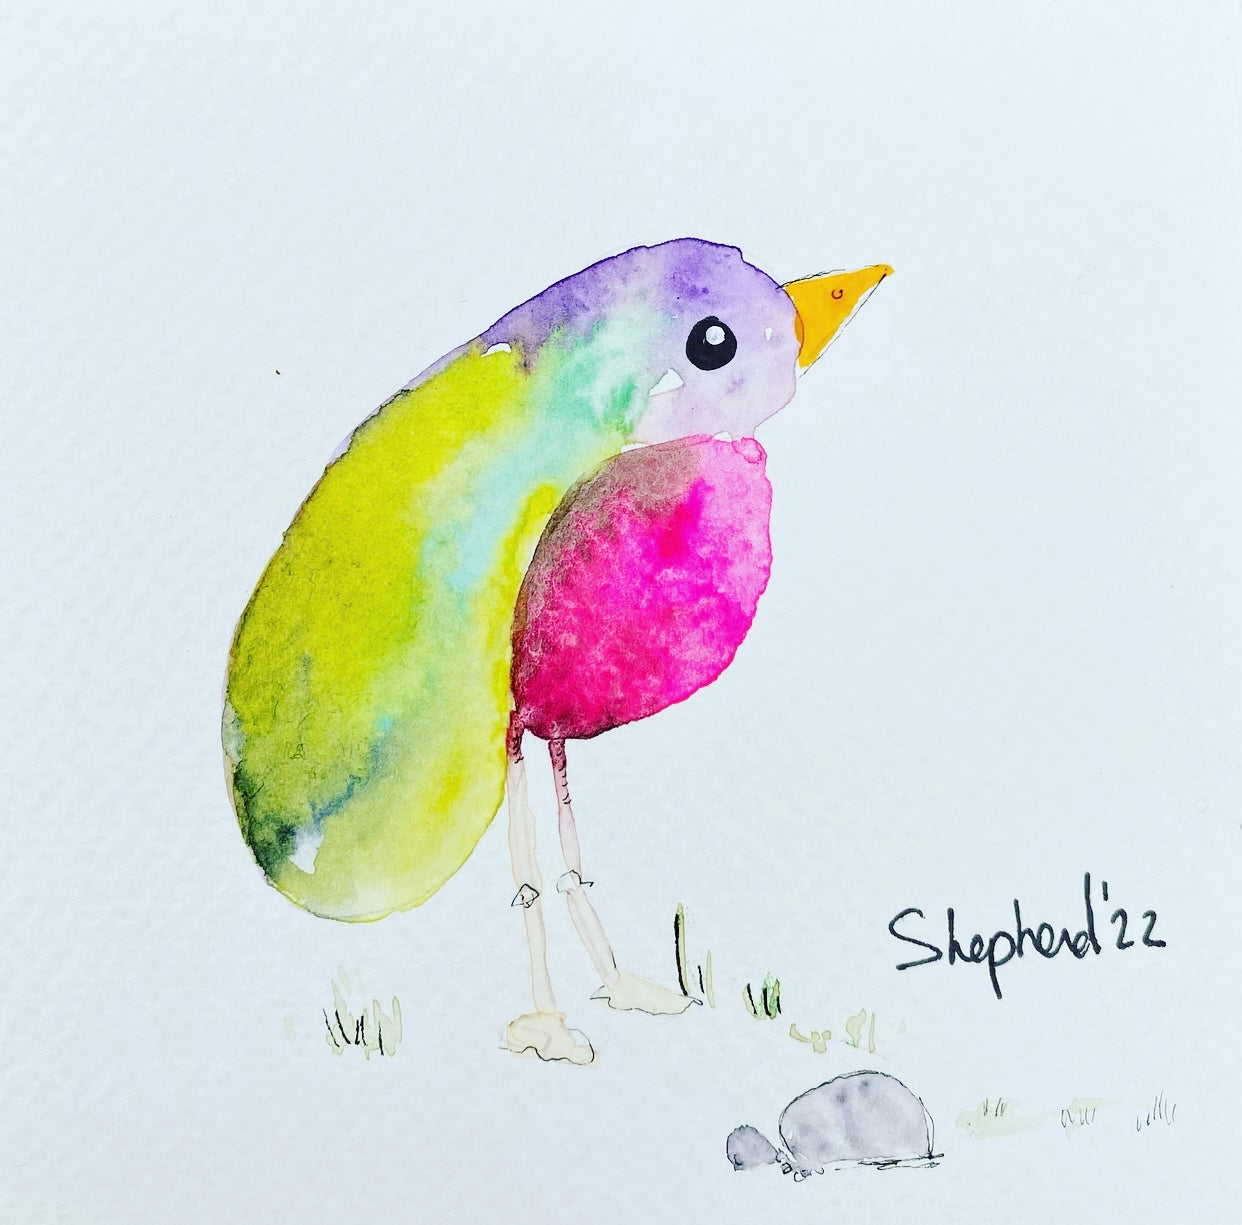 "Shauna" Gratitude Bird - Original Watercolour Painting